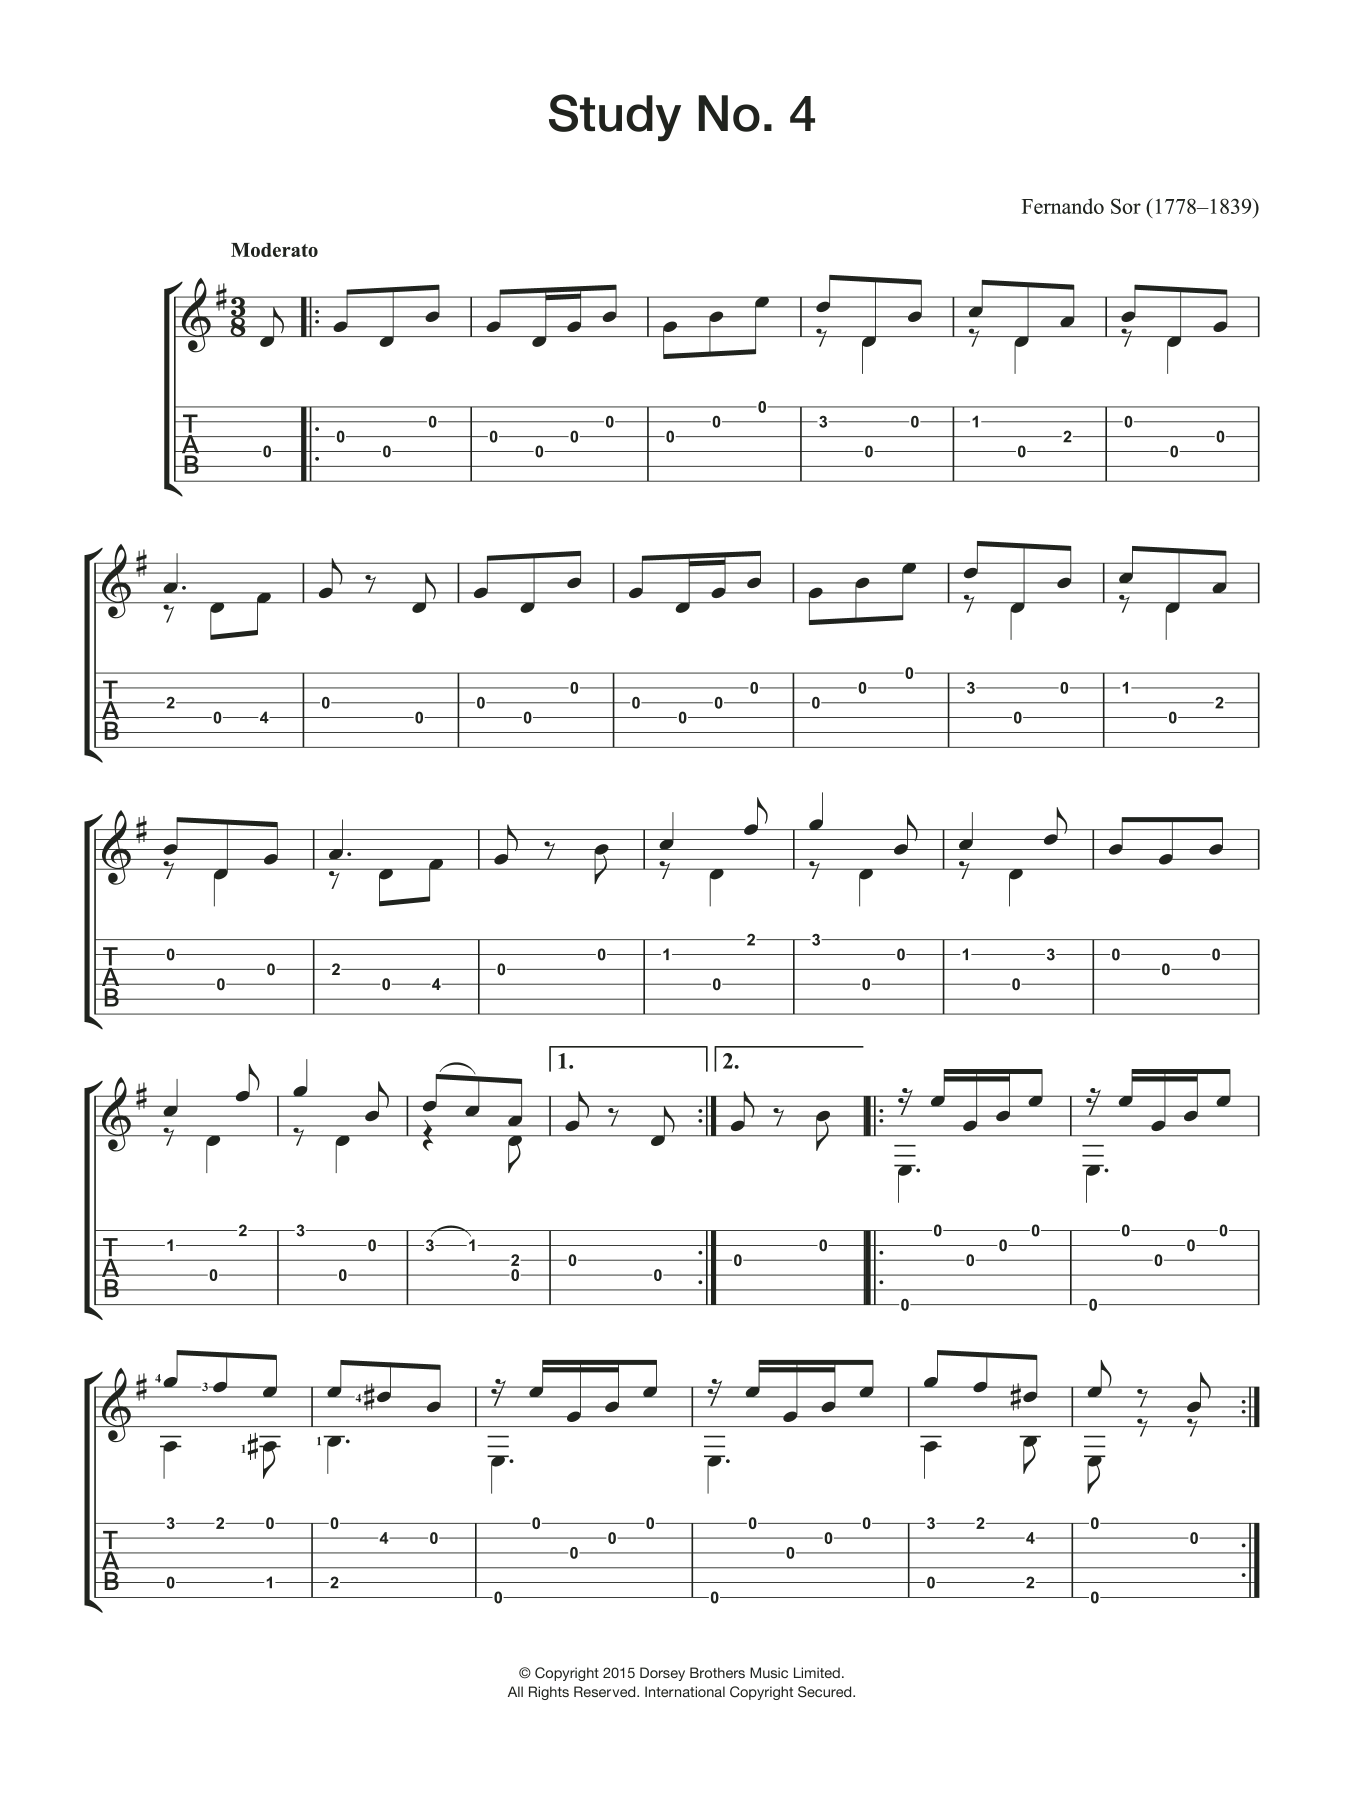 Fernando Sor Study No. 4 sheet music notes and chords arranged for Easy Guitar